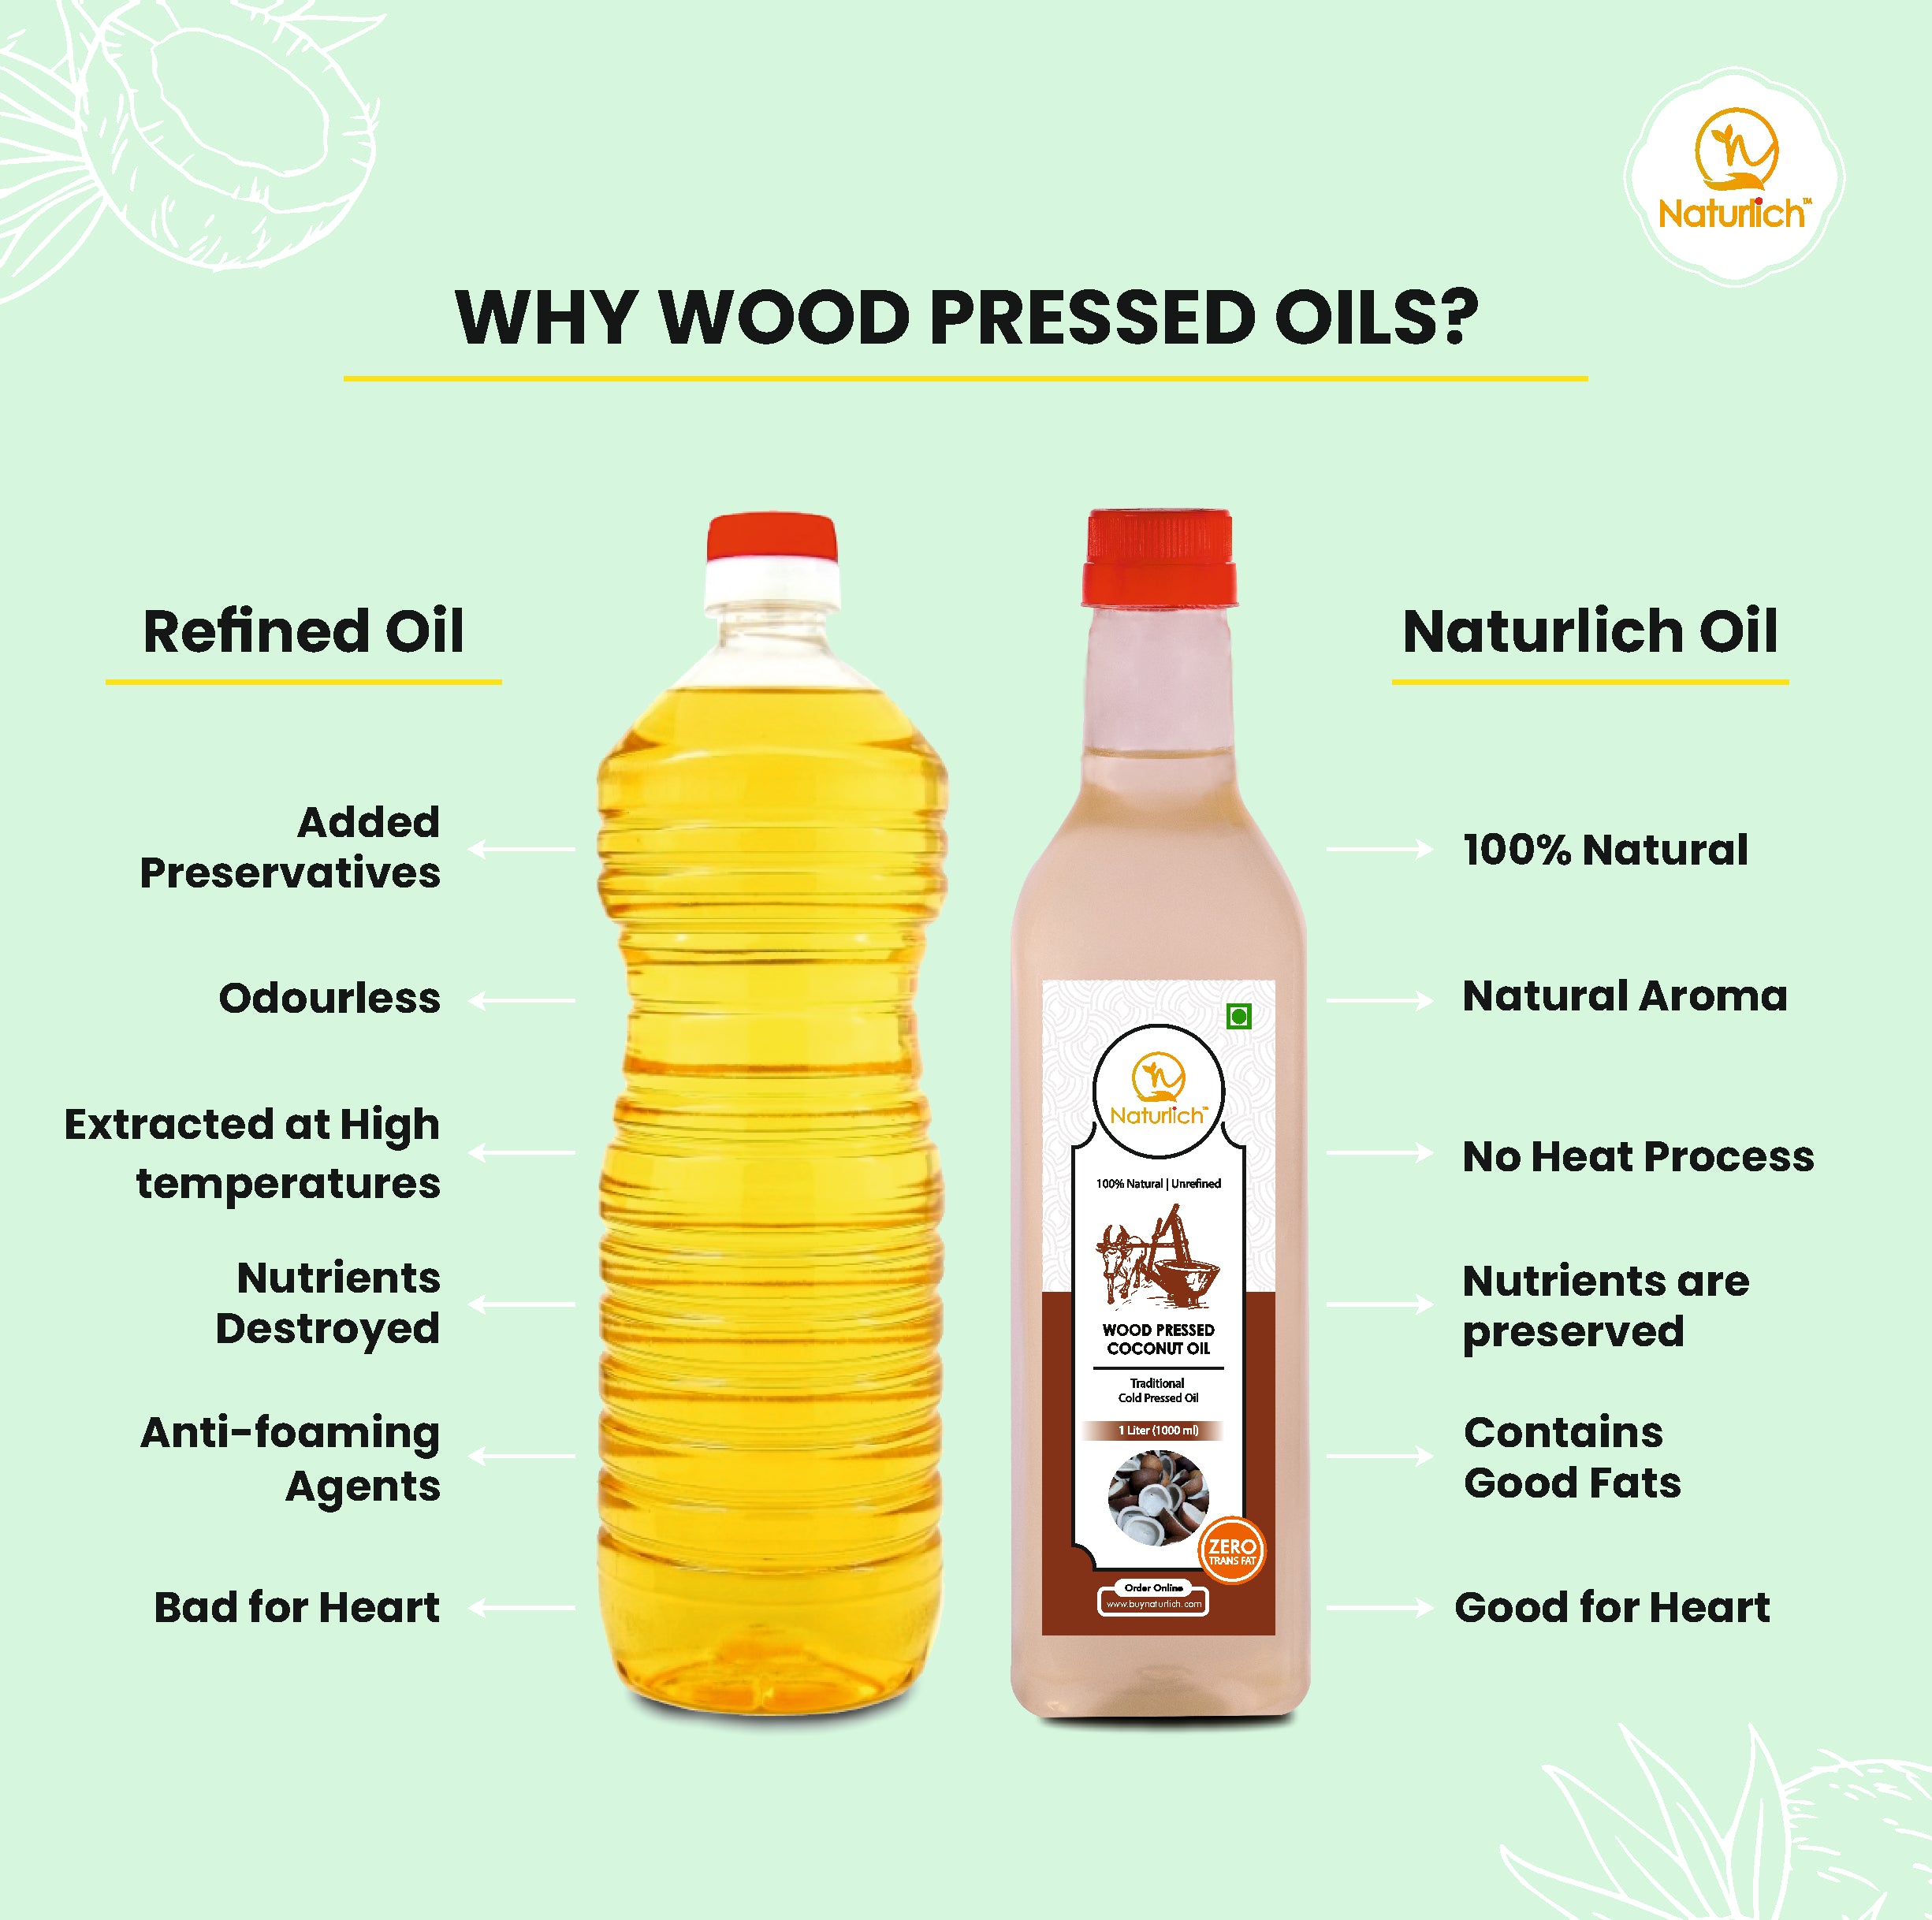 Wood Pressed Coconut Oil, Pure & Natural Virgin Coconut Oil, Keto-Friendly & Gluten-Free Cooking Oil, Wood Pressed - Naturlich